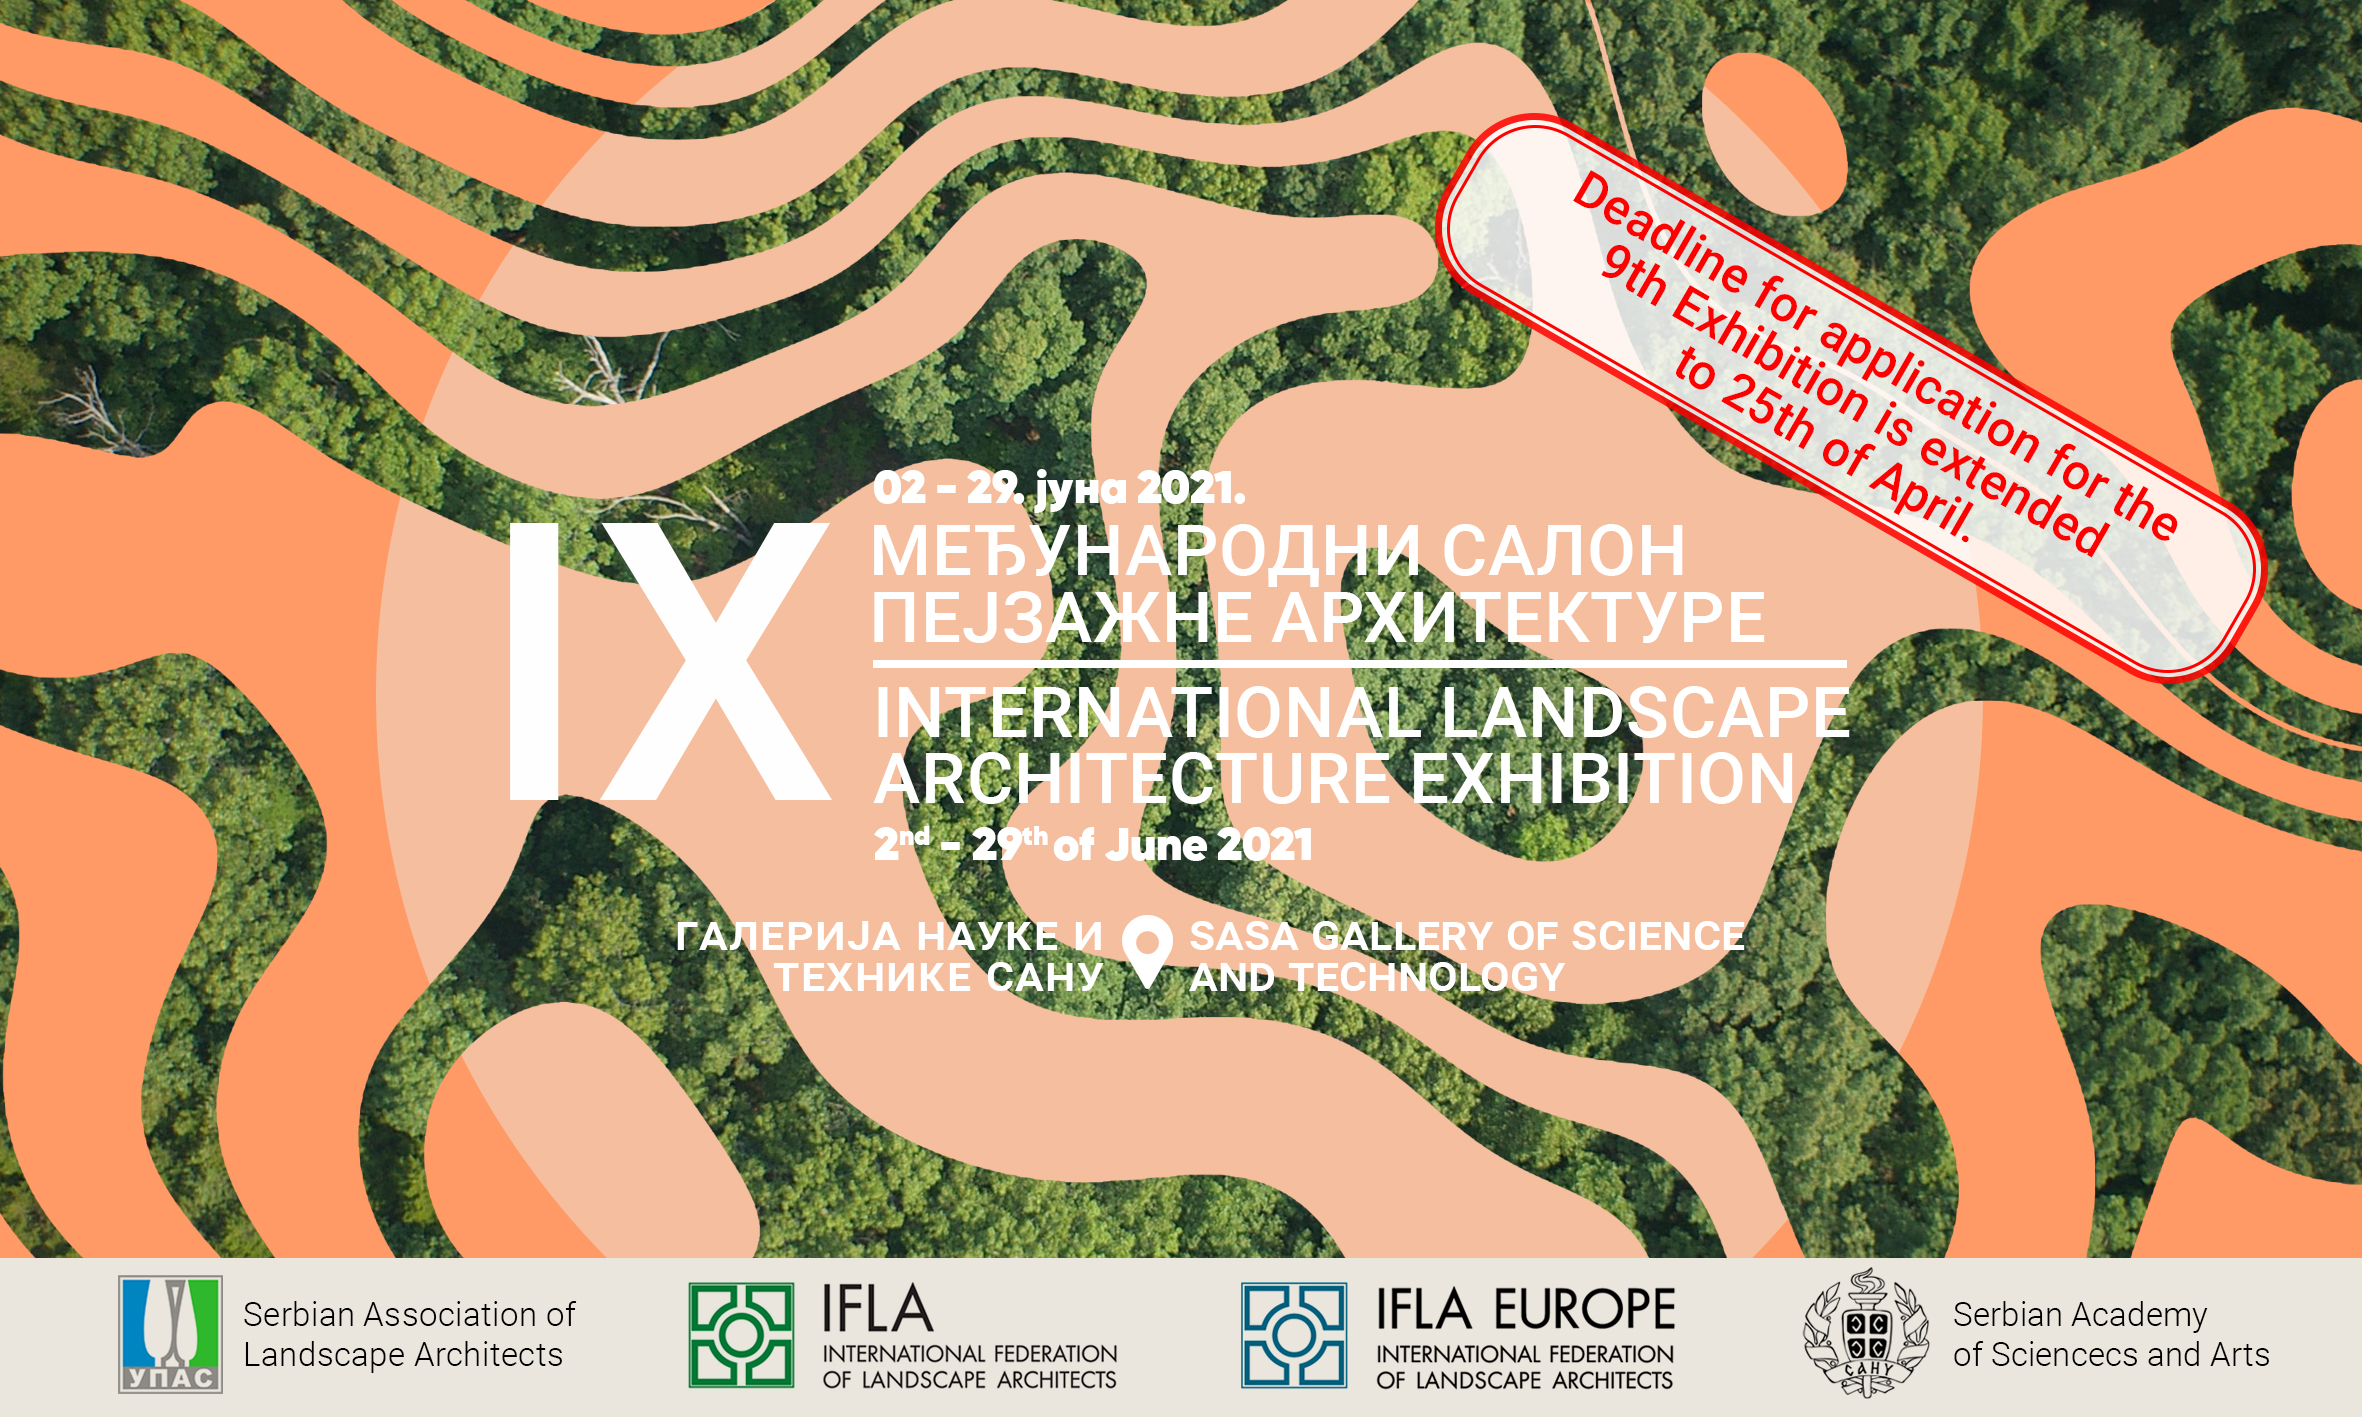 The 9th International Landscape Architecture Exhibition 2021